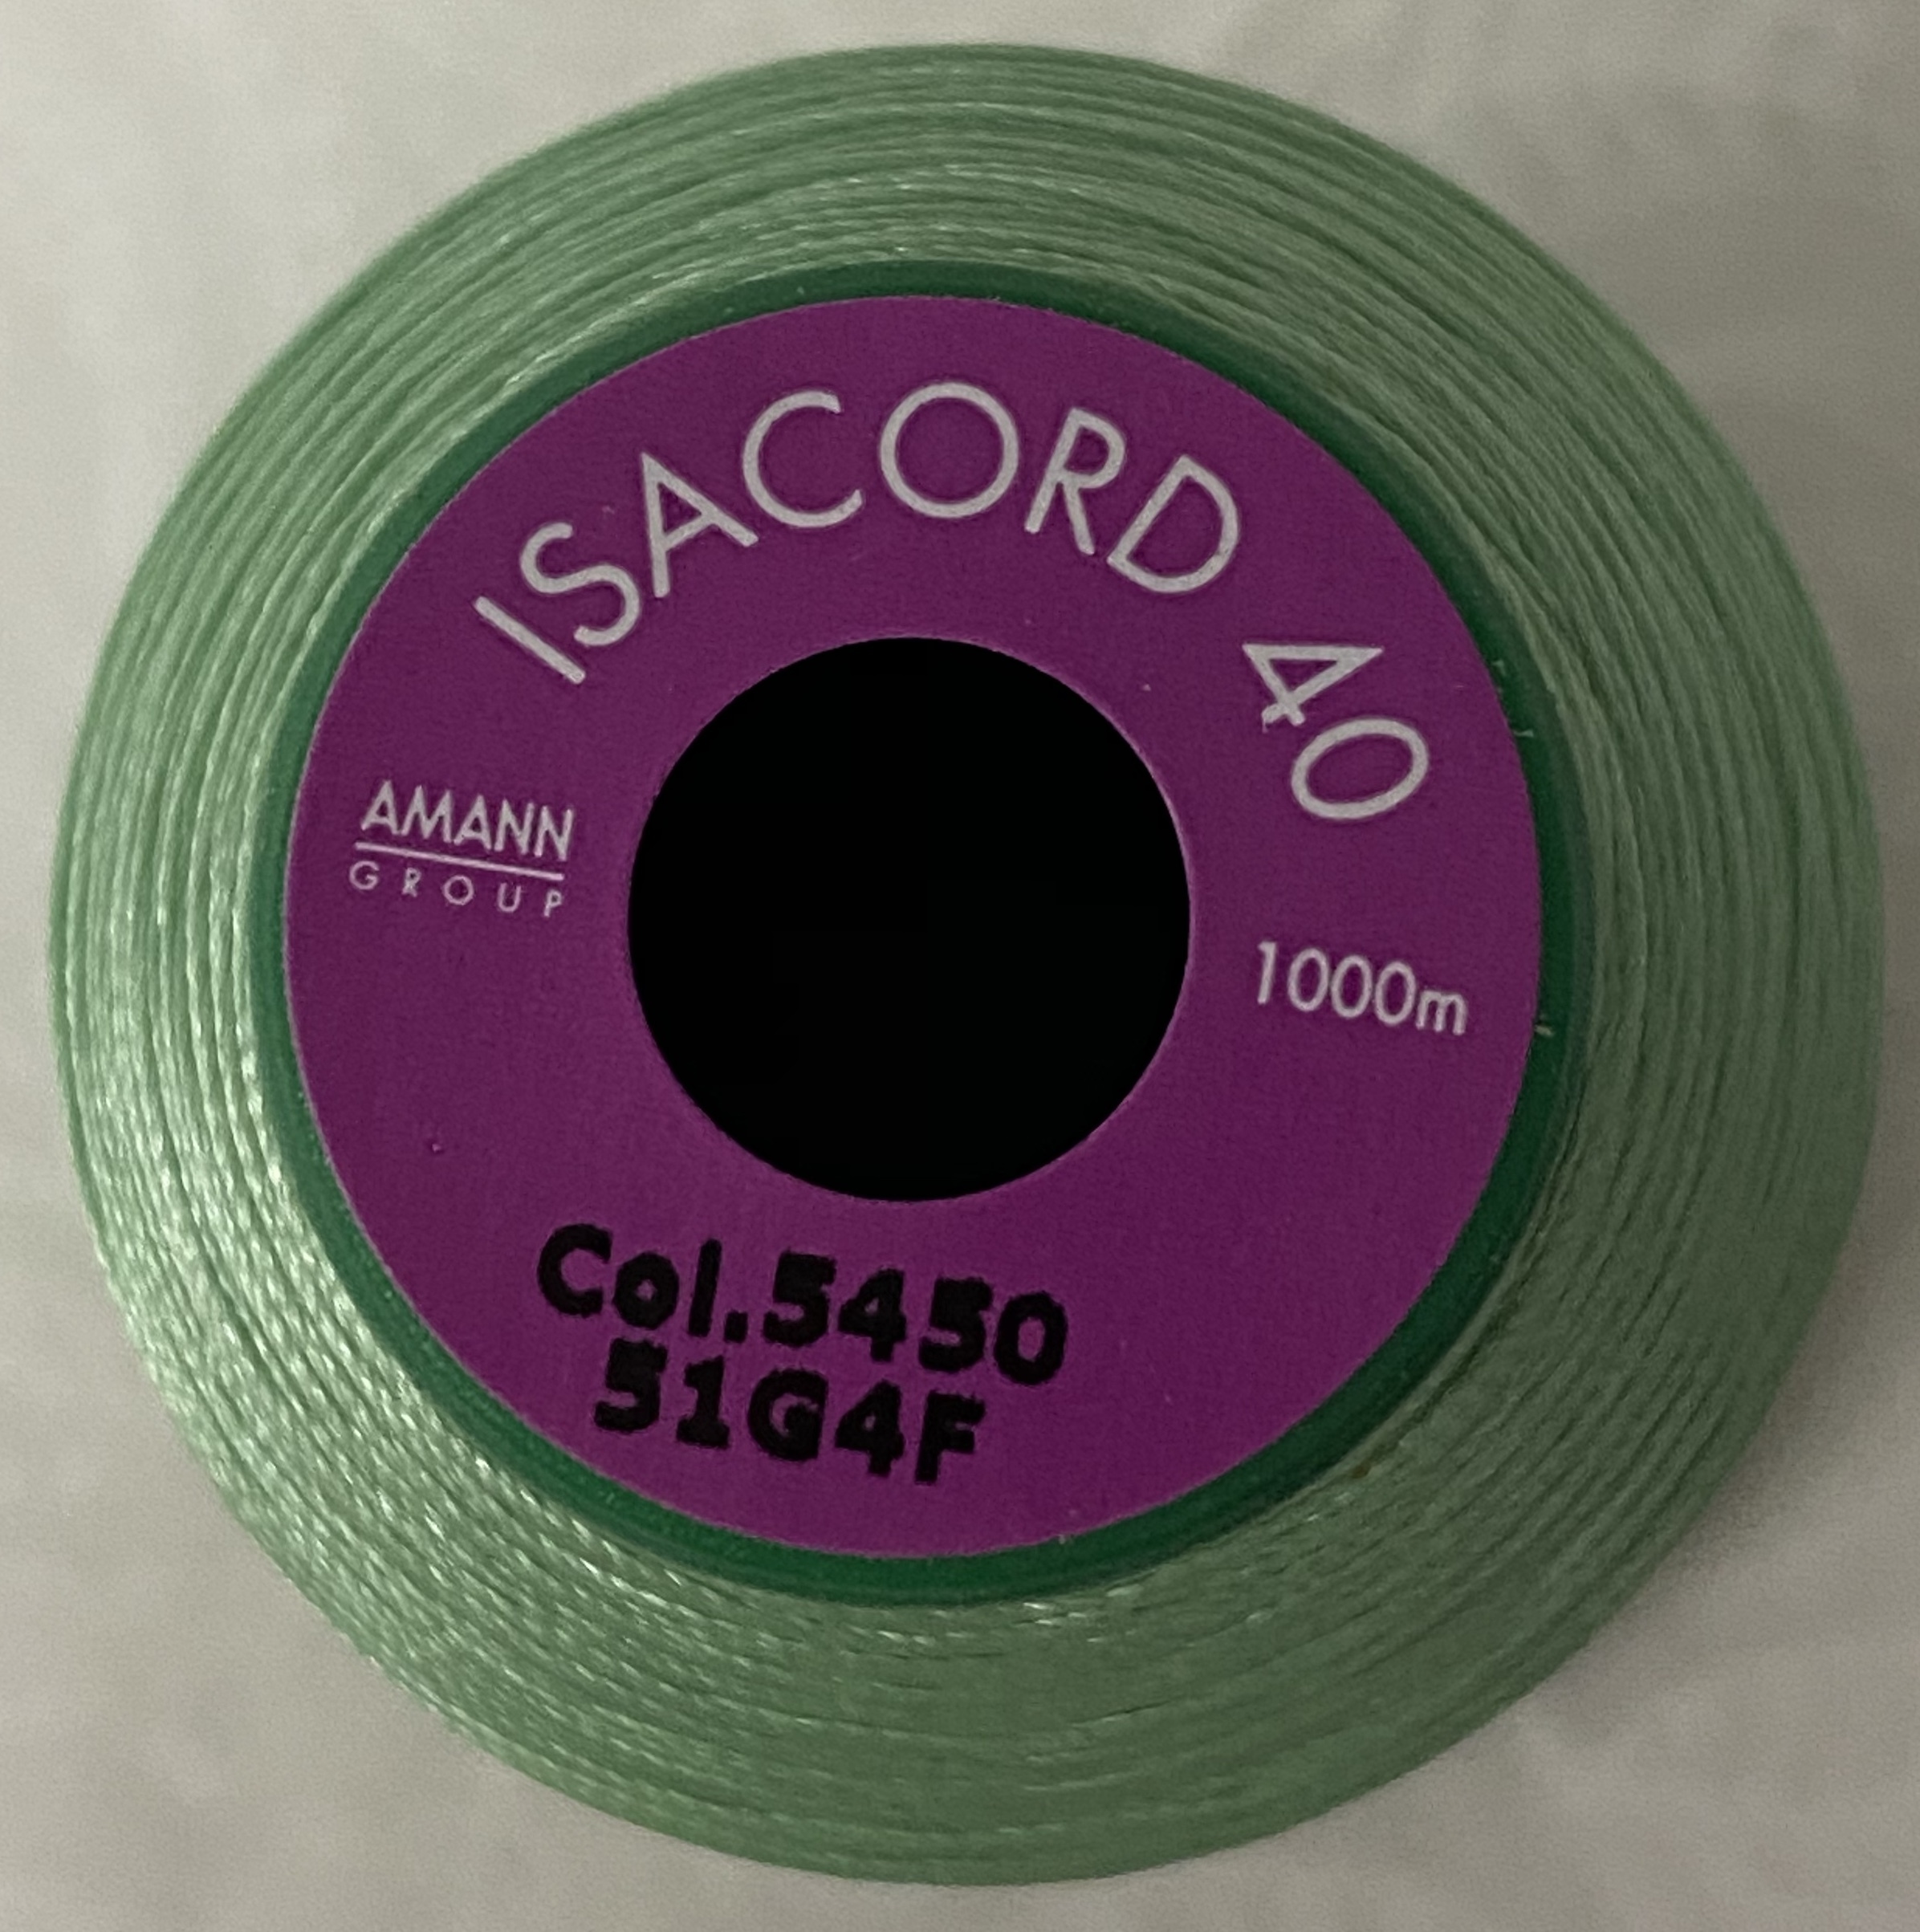 ISACORD 40 #5450 BASIC SEAFOAM 1000m Machine Embroidery Sewing Thread